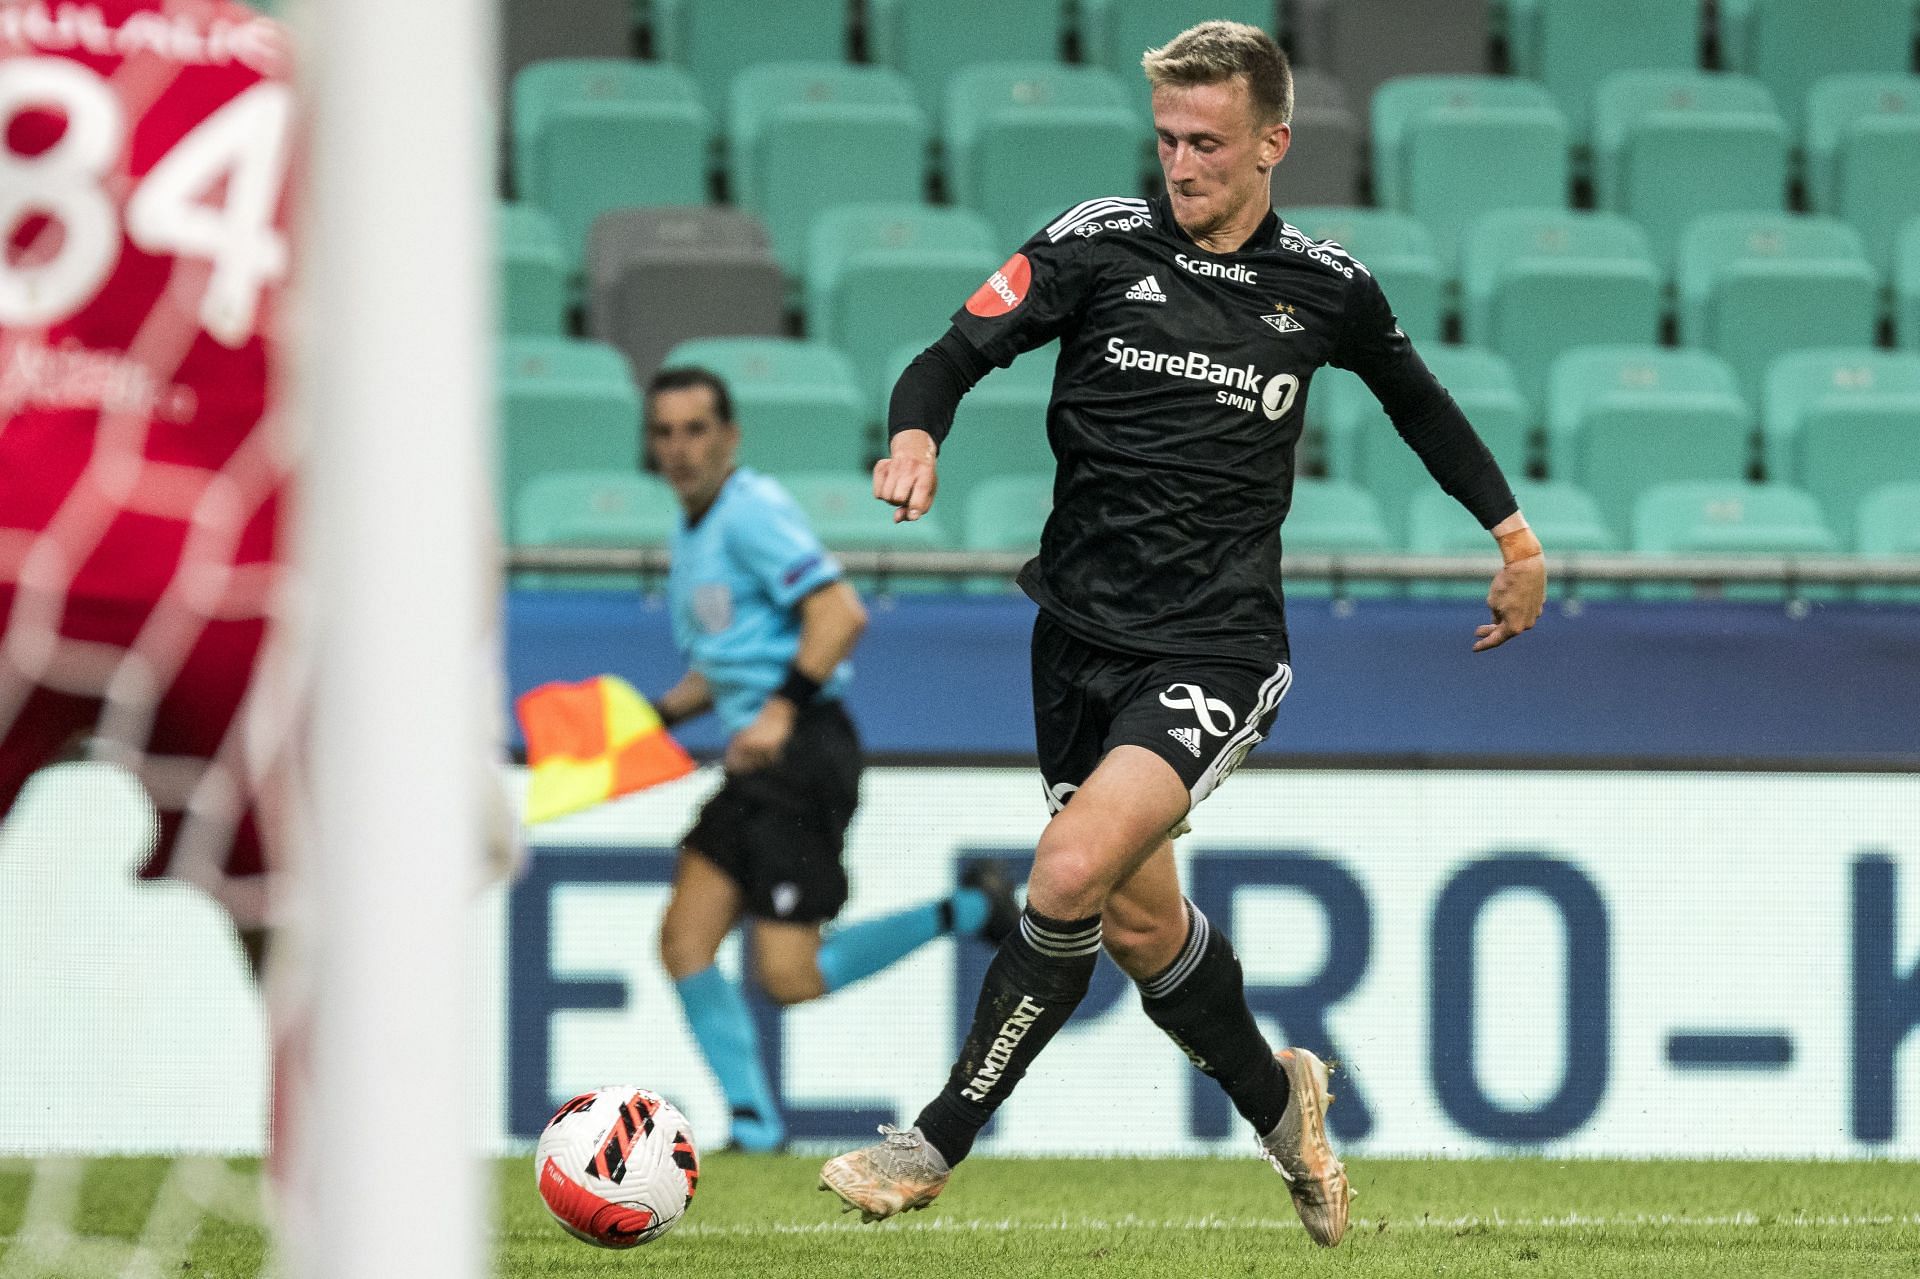 Rosenborg play Kristiansund on Saturday